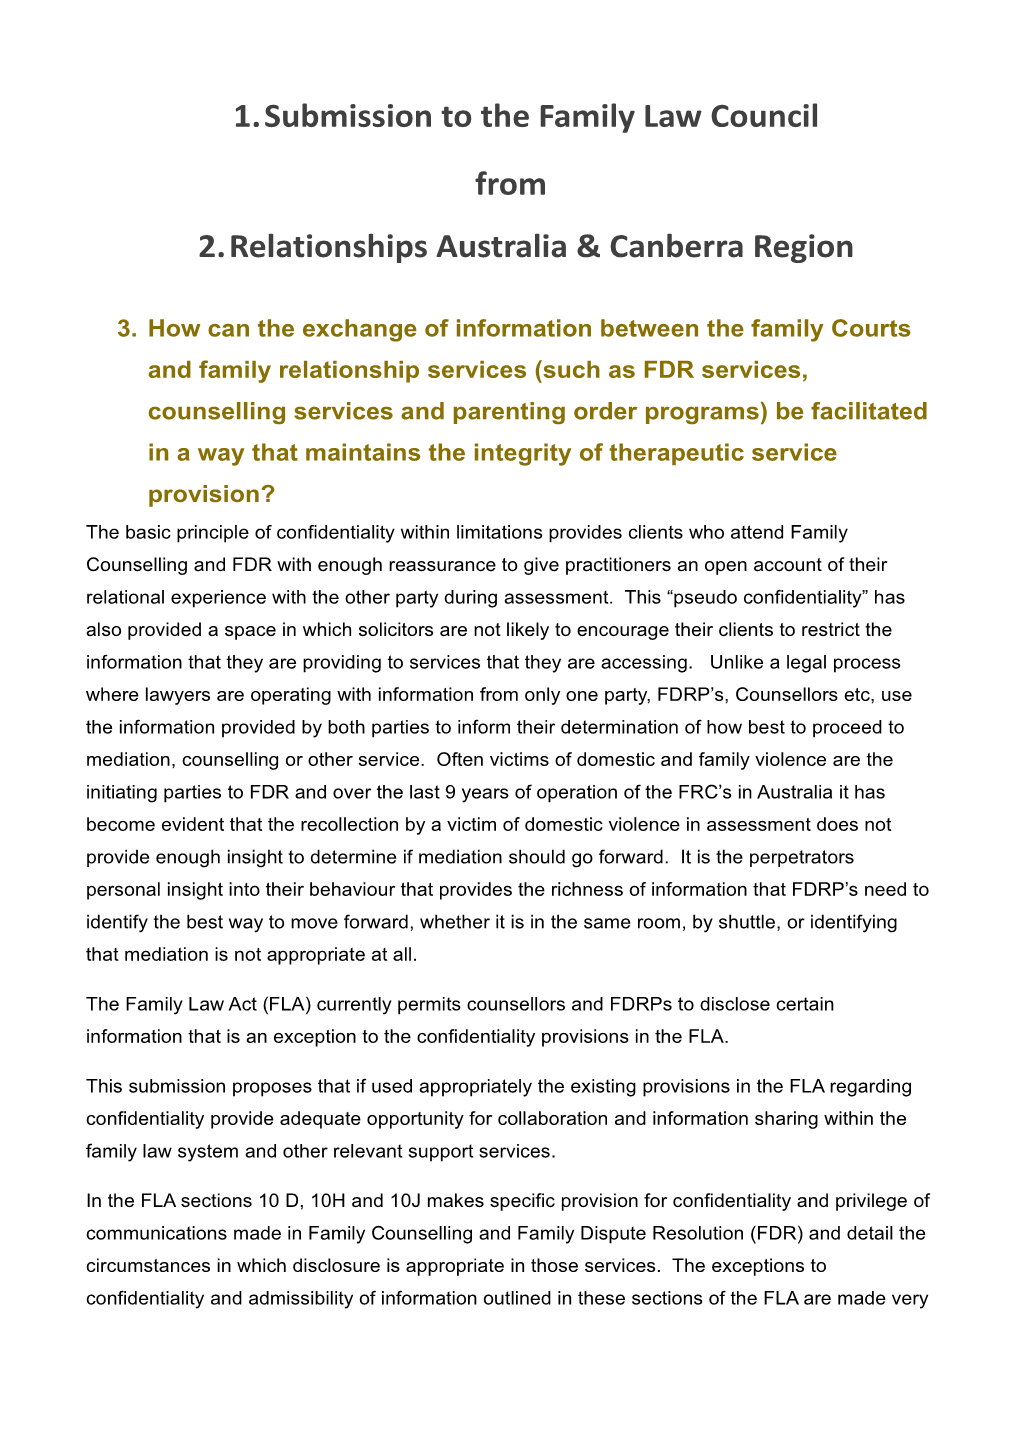 Relationships Australia Canberra & Region